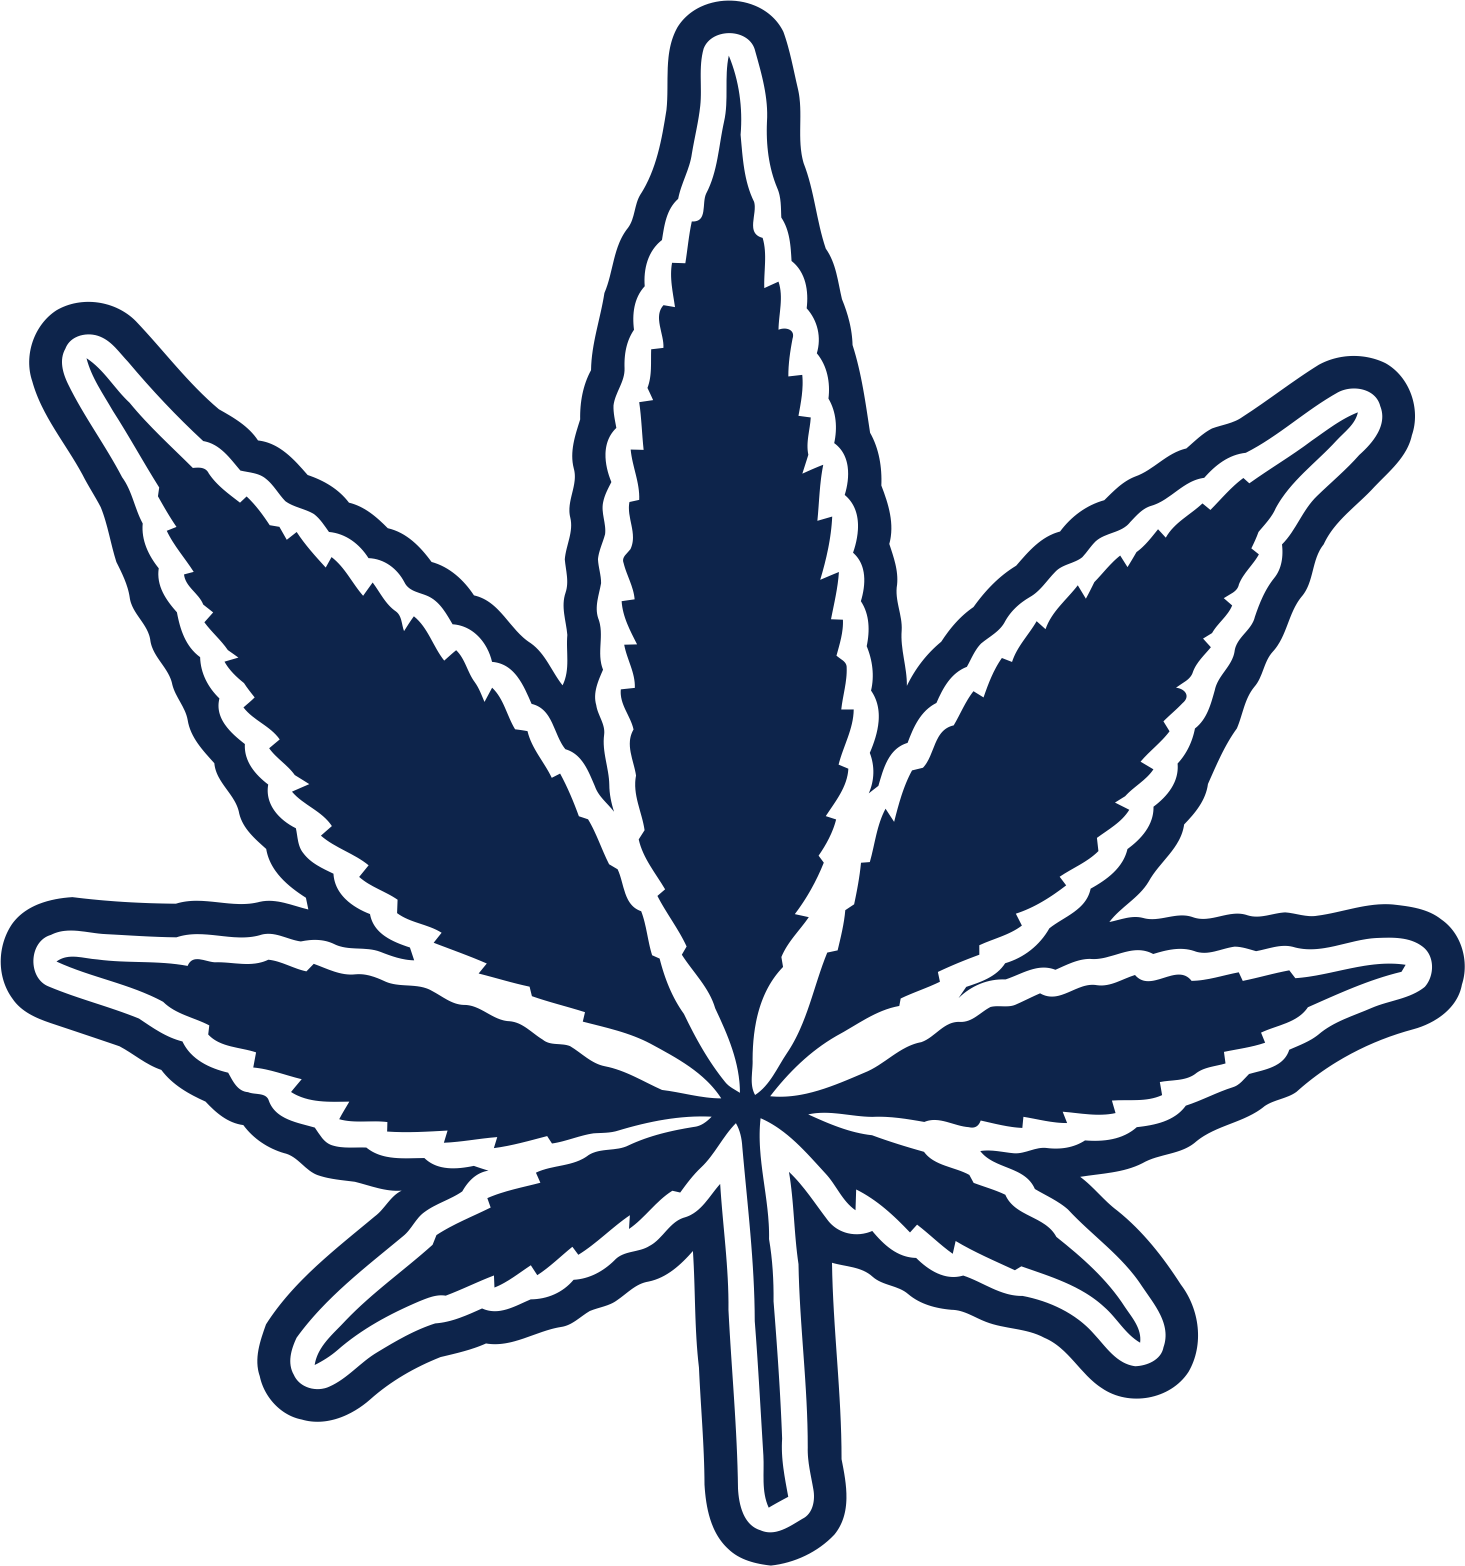 Dallas Cowboys Smoking Weed Logo fabric transfer